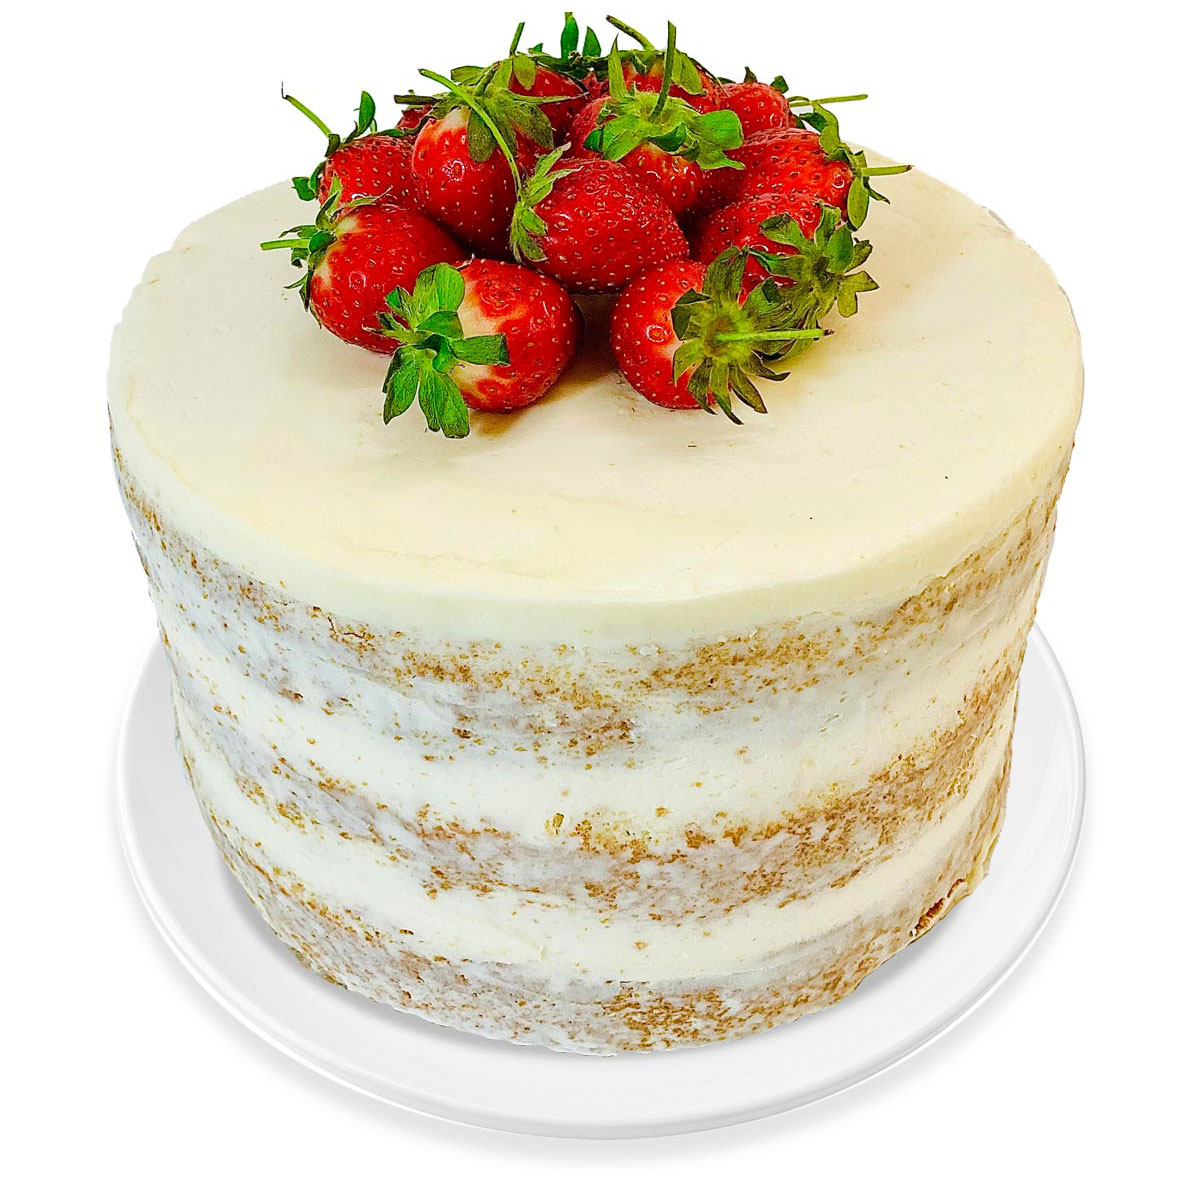 Strawberry Cake - Wikipedia